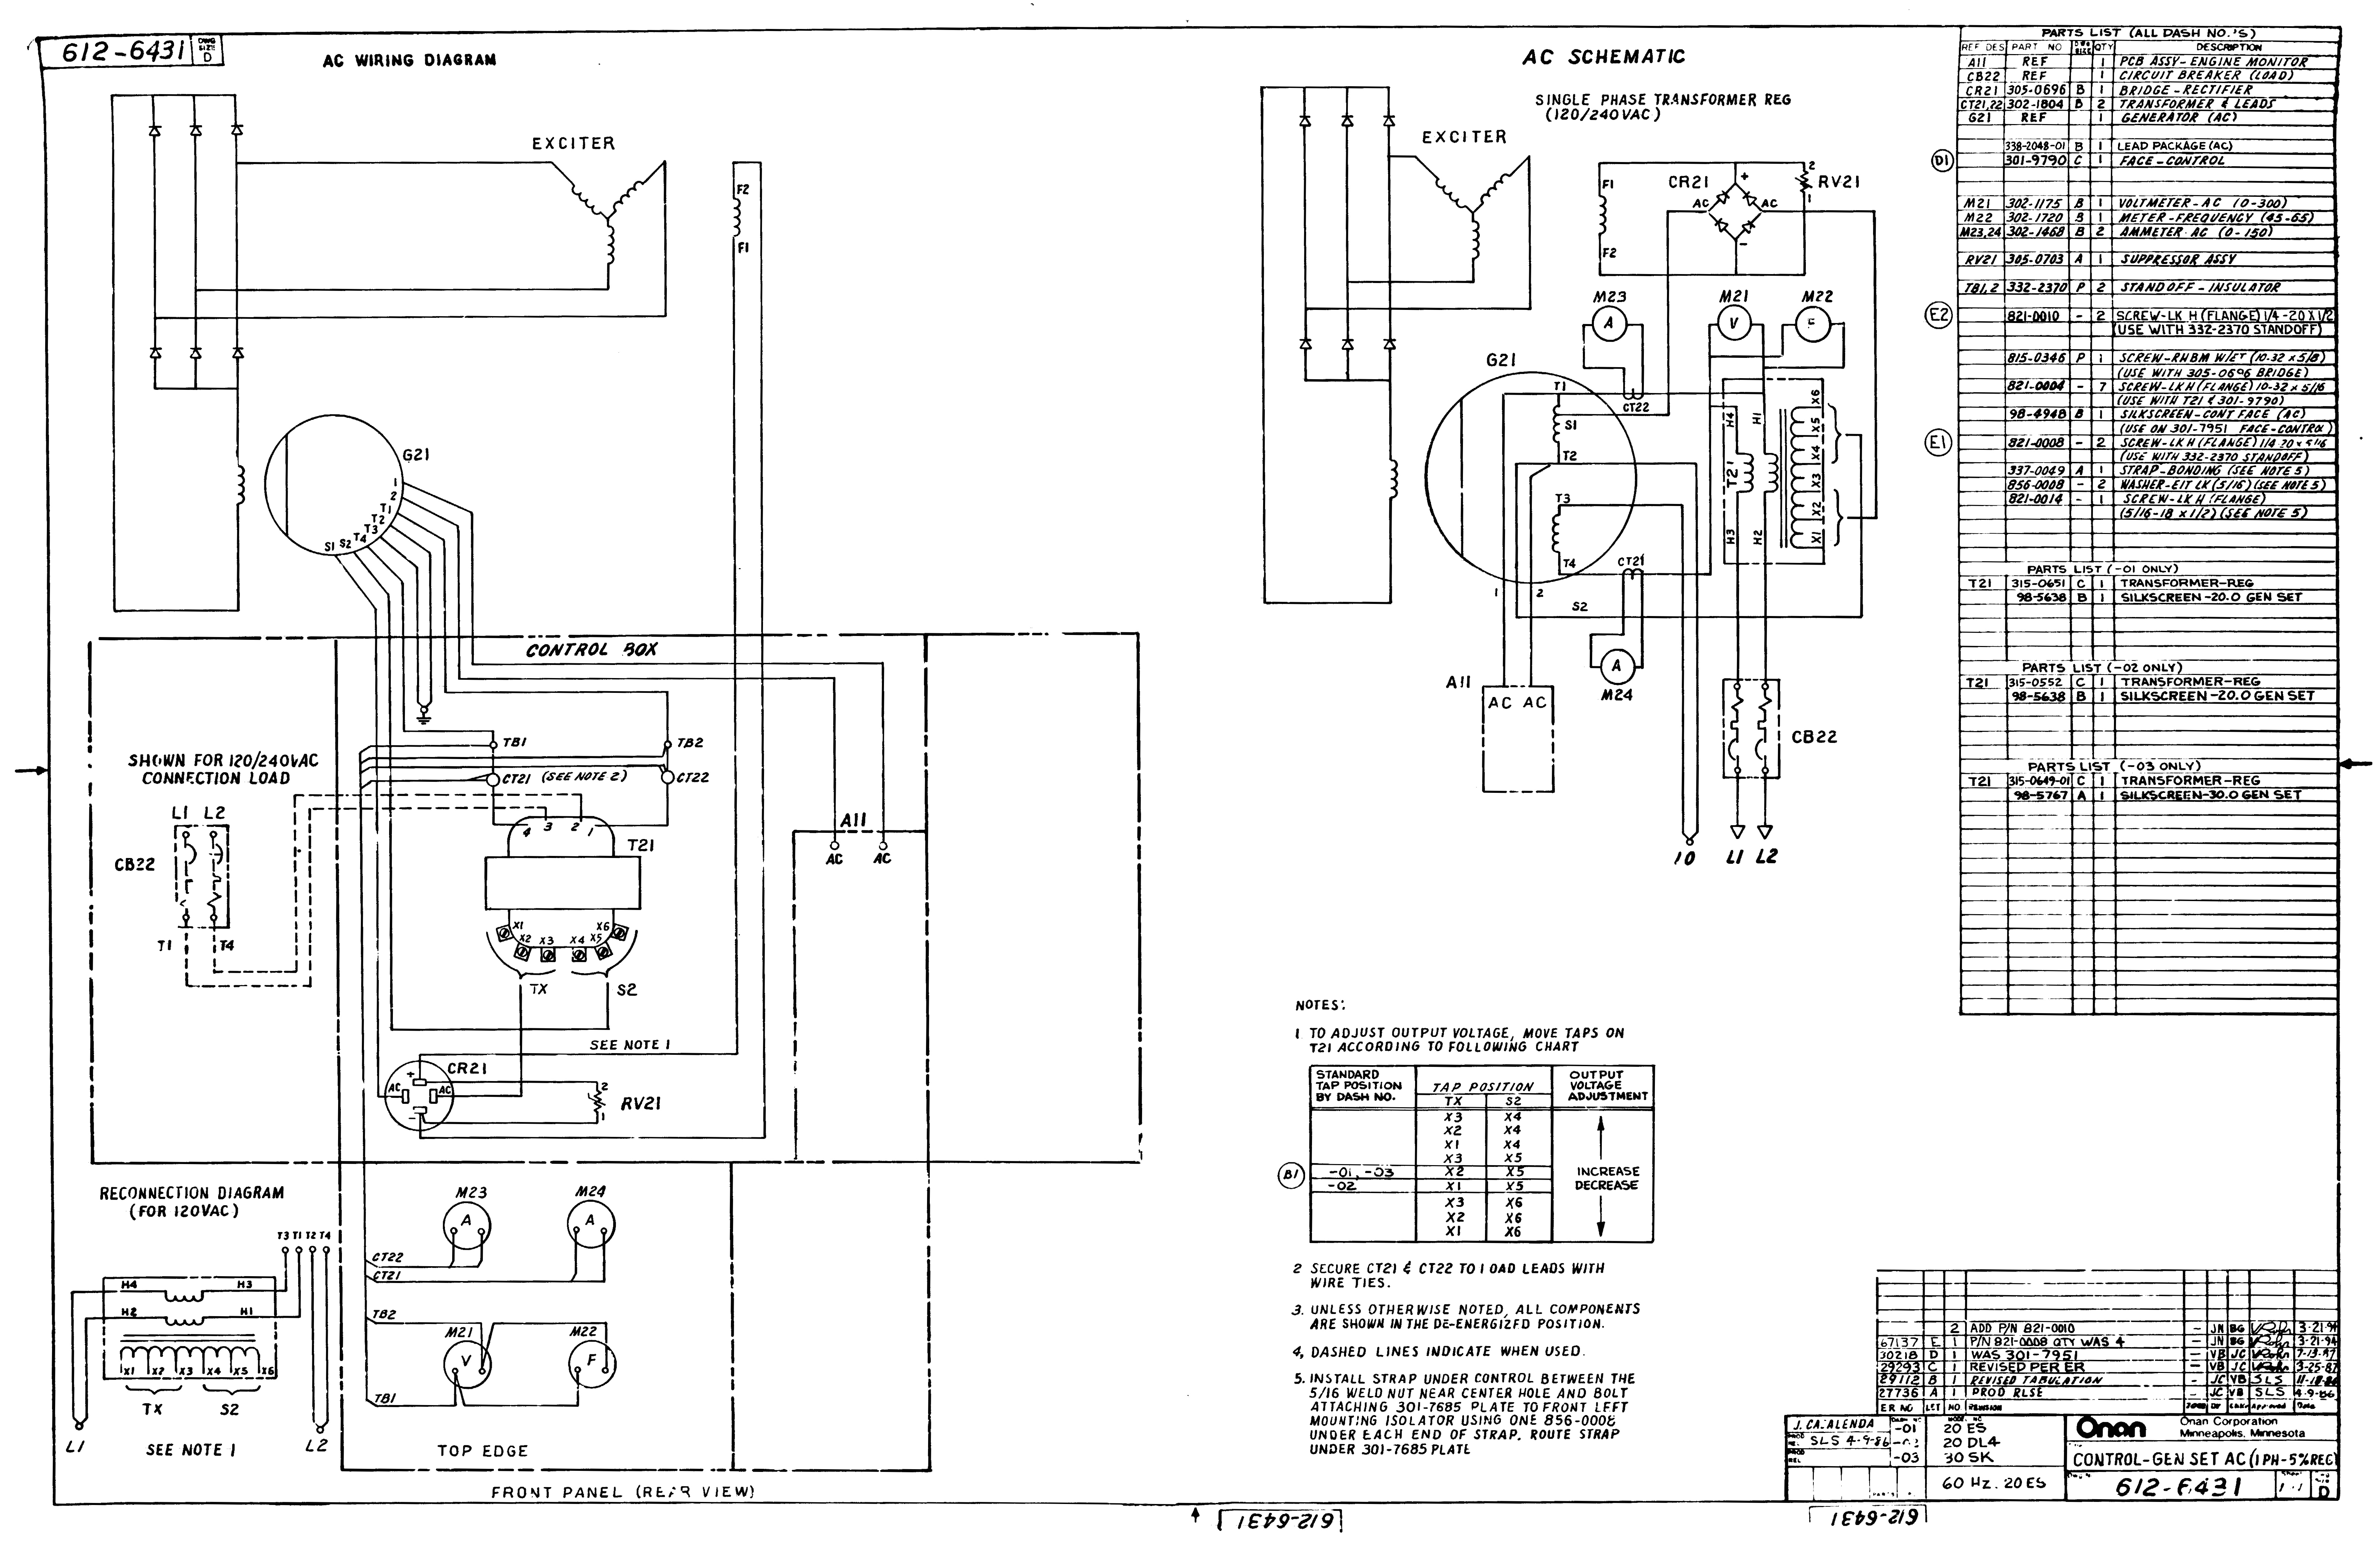 onan pump diagrams wiring diagram usedonan pump diagrams wiring diagram datasource onan 18 hp wiring diagram